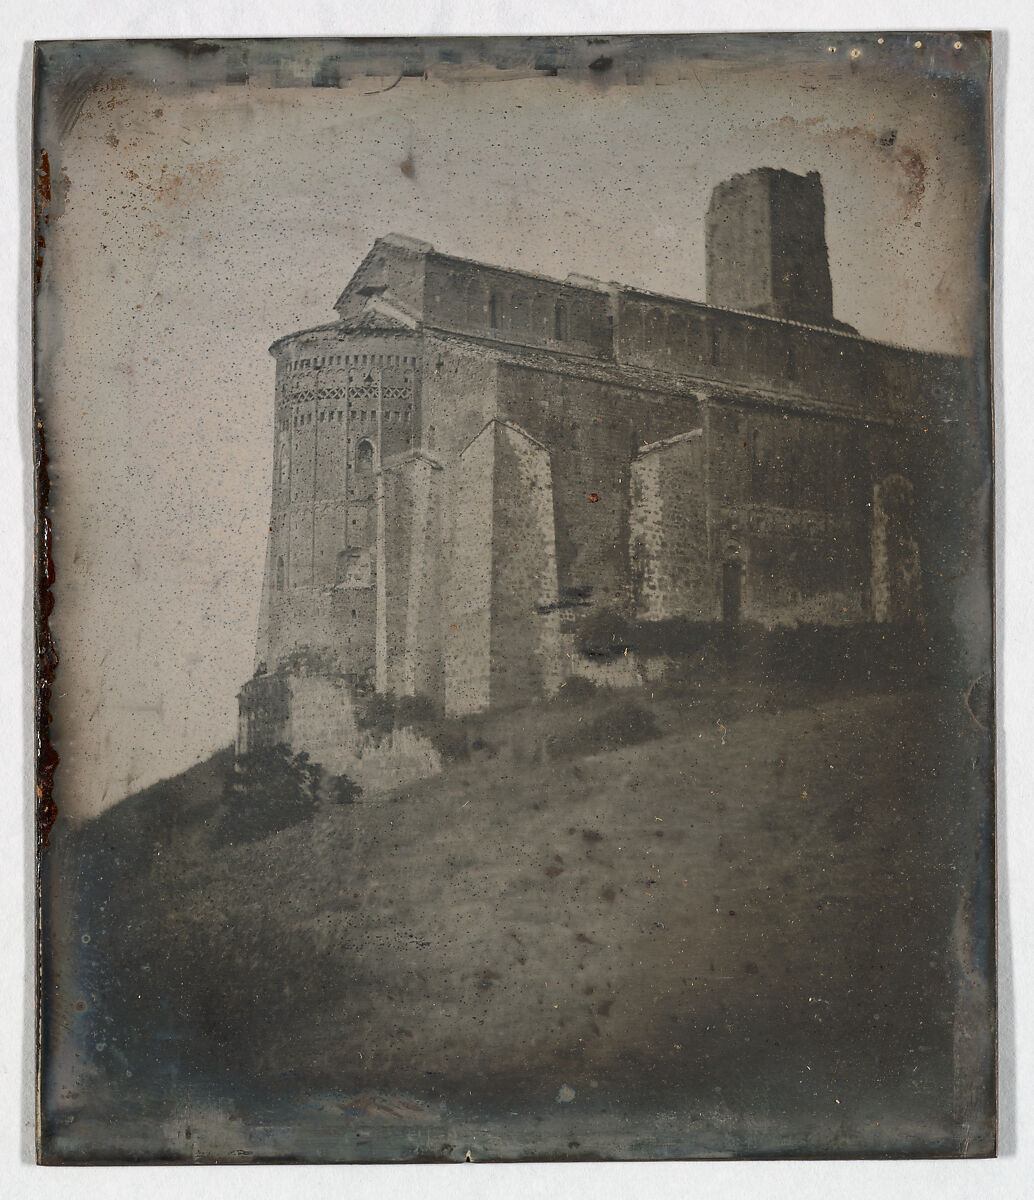 Apse, Basilica San Pietro, Toscanella (Tuscania) (43. Toscanella. Eglise de S. Pietro. Apside.), Joseph-Philibert Girault de Prangey (French, 1804–1892), Daguerreotype 